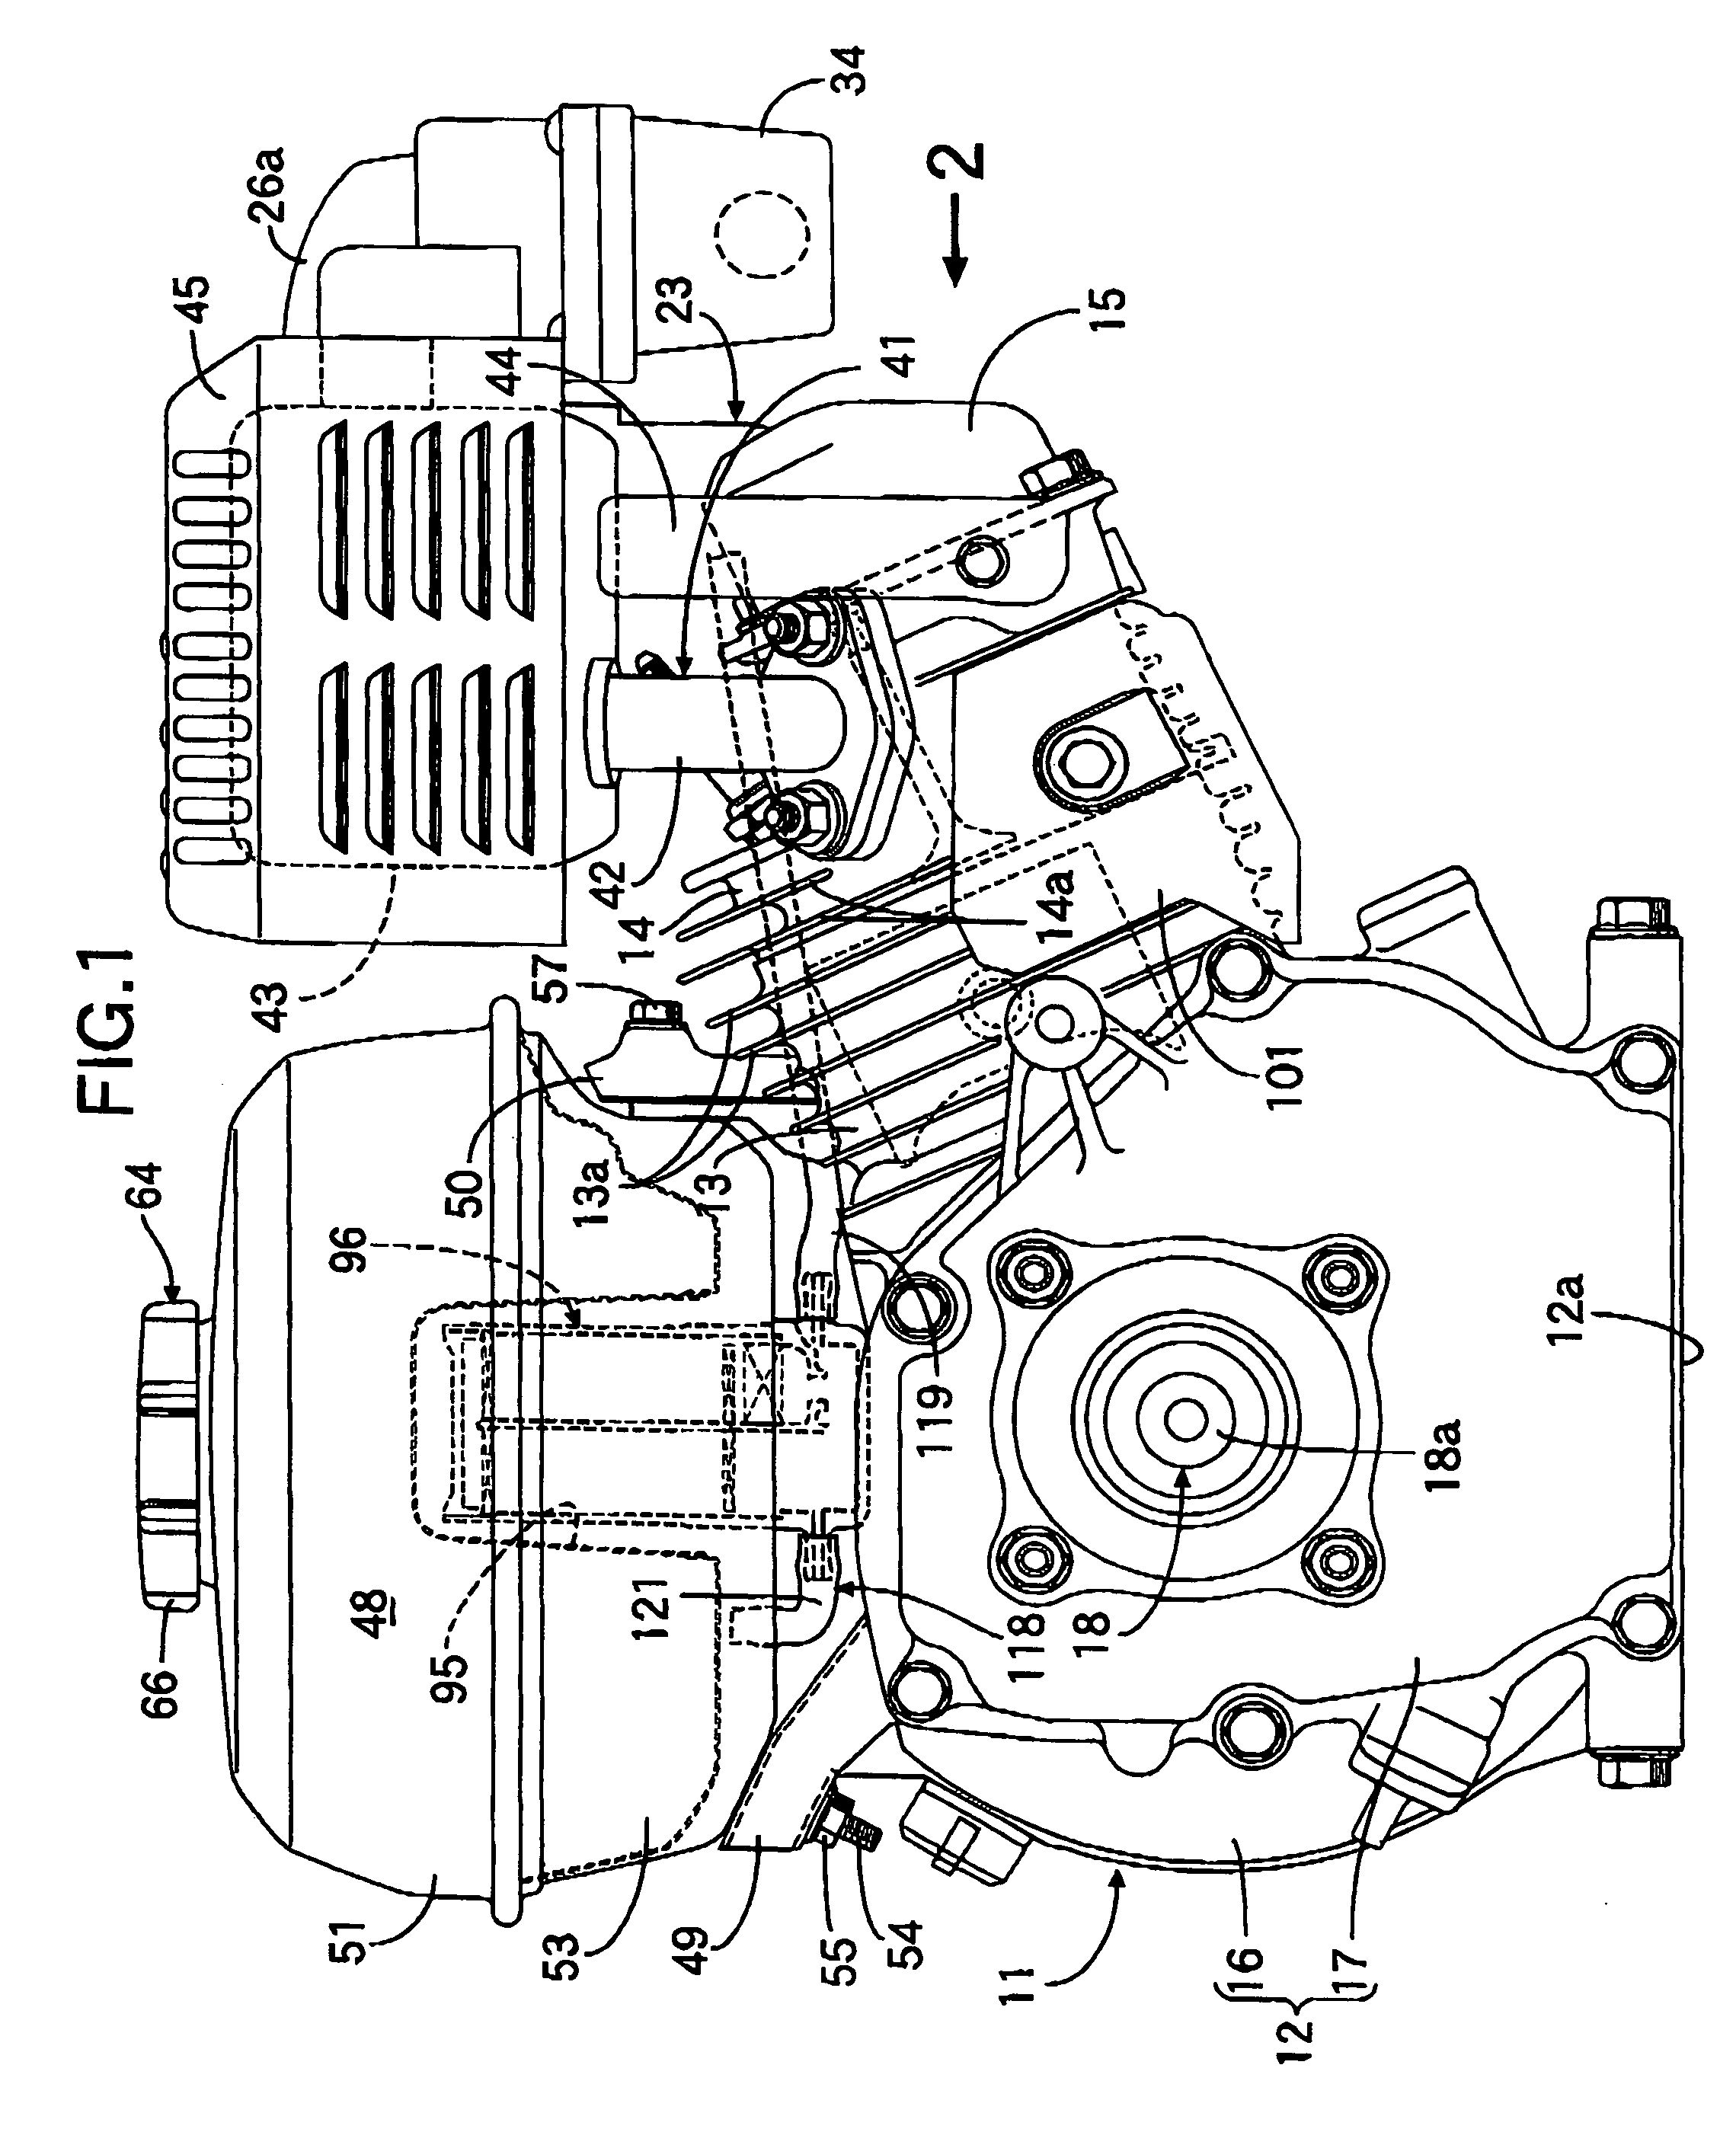 General-purpose engine